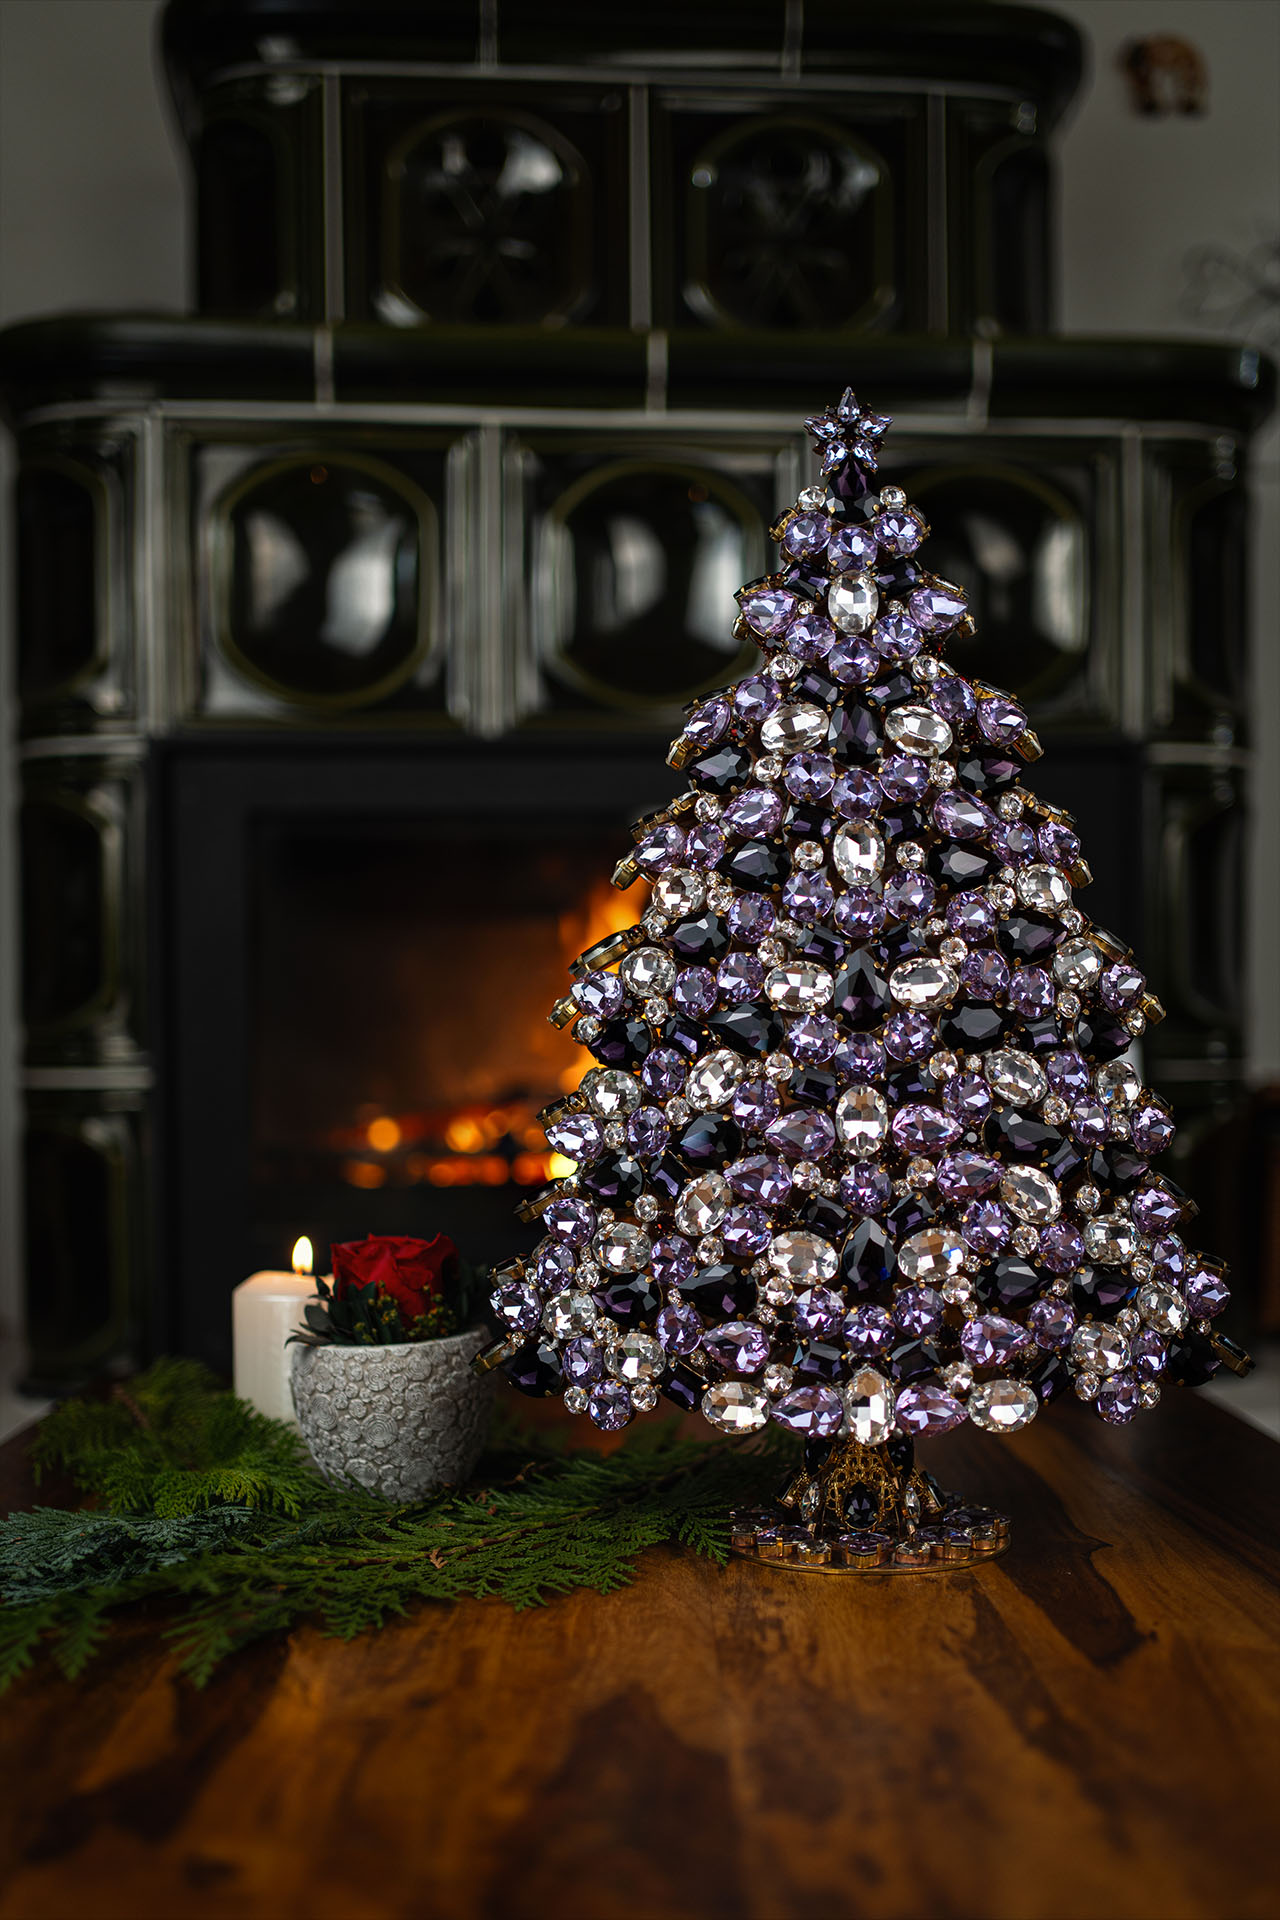 Handmade Czech 3D rhinestones Christmas tree - purple color